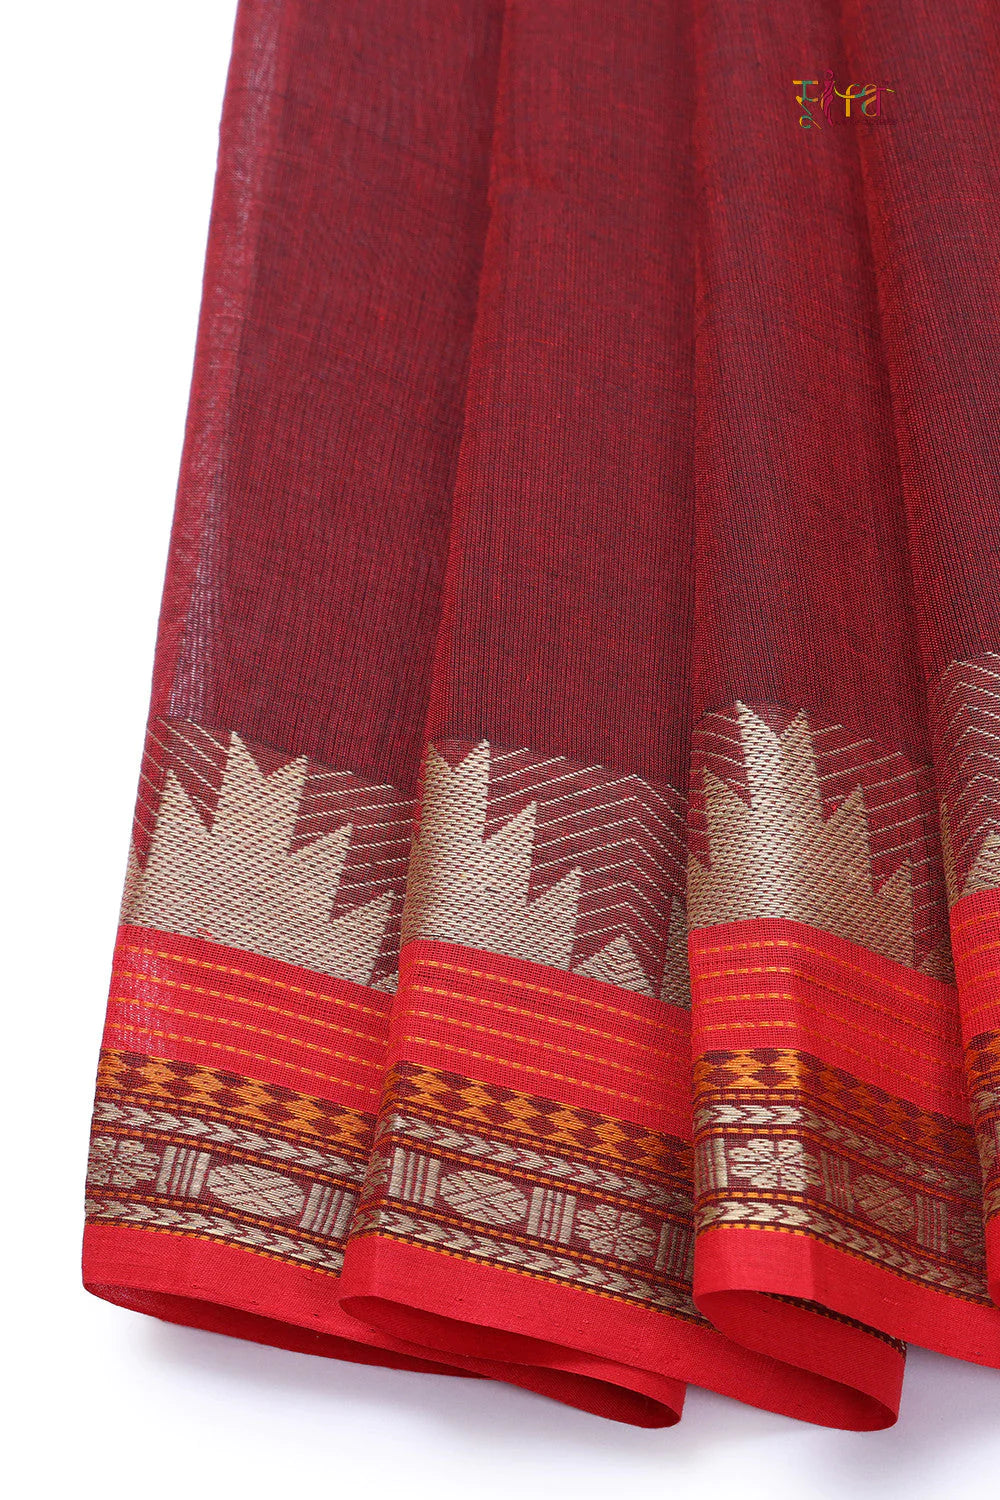 Maroon handloom pure cotton Kanchi Saree